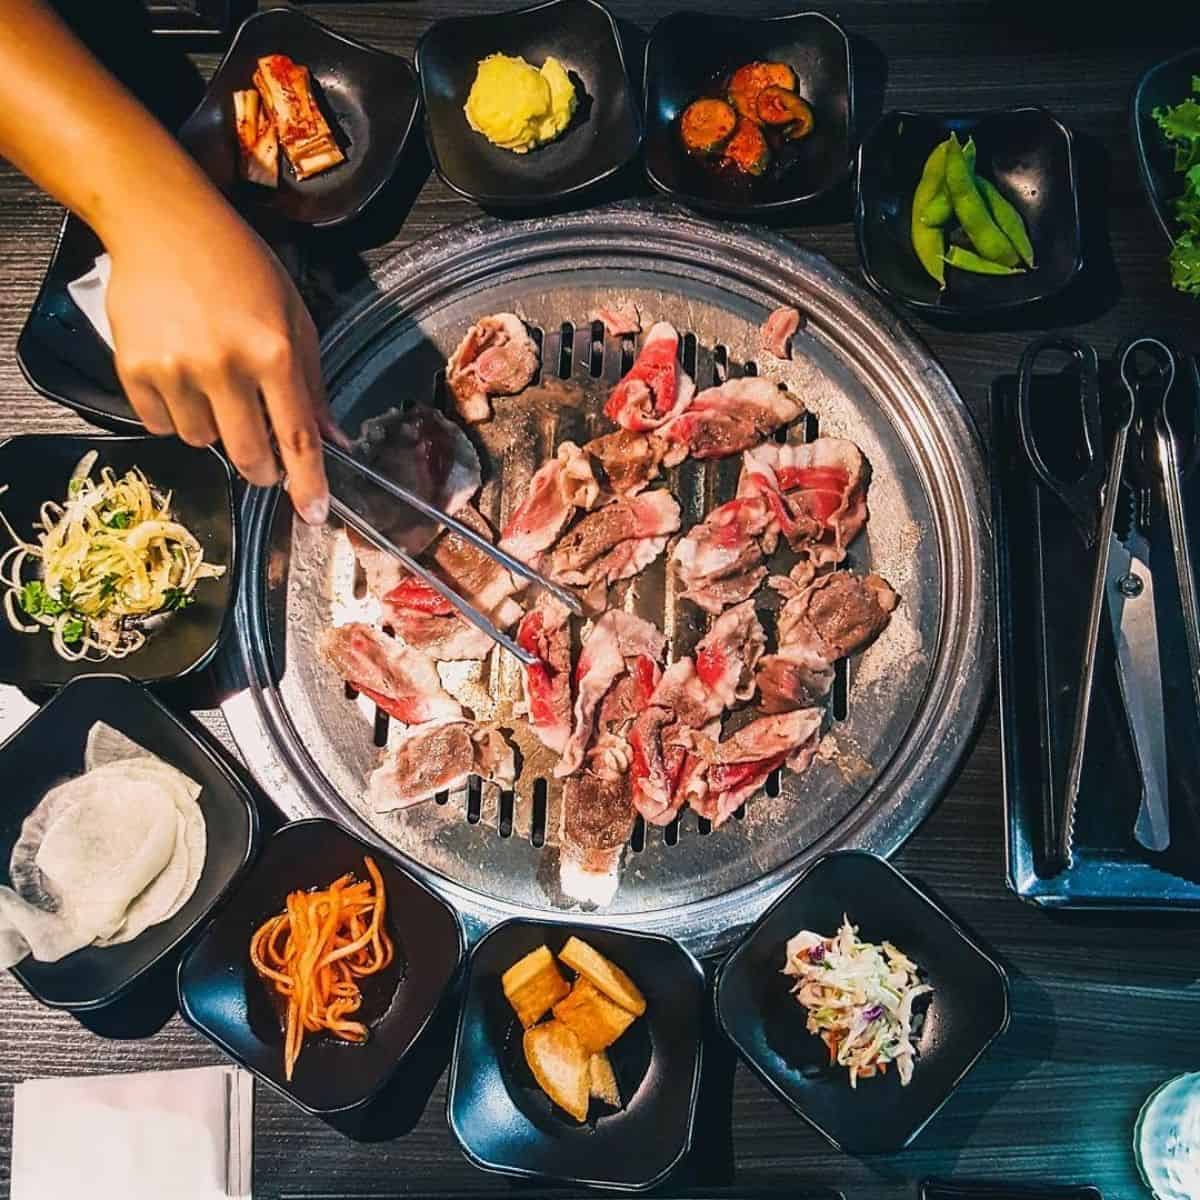 https://www.honestfoodtalks.com/wp-content/uploads/2022/03/Birds-eye-view-of-Korean-BBQ-with-side-dishes.jpg